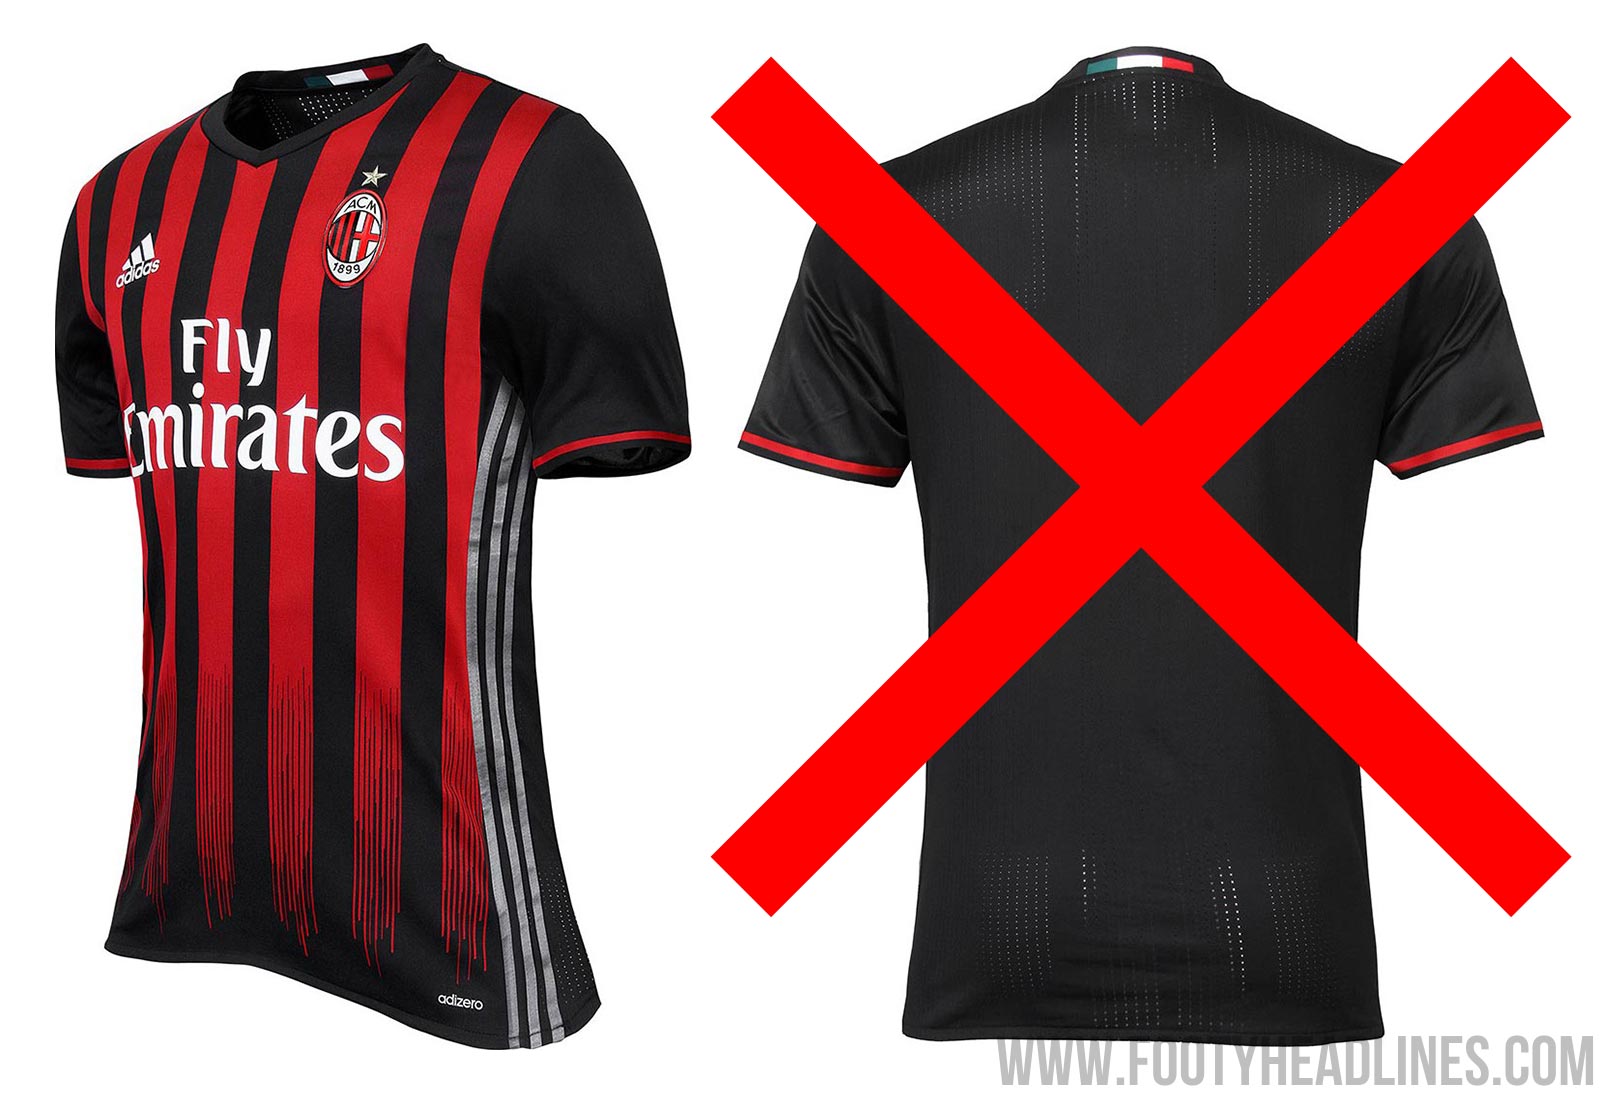 analizar chatarra dejar UEFA Bans Striped Shirts with Solid Backs - Footy Headlines